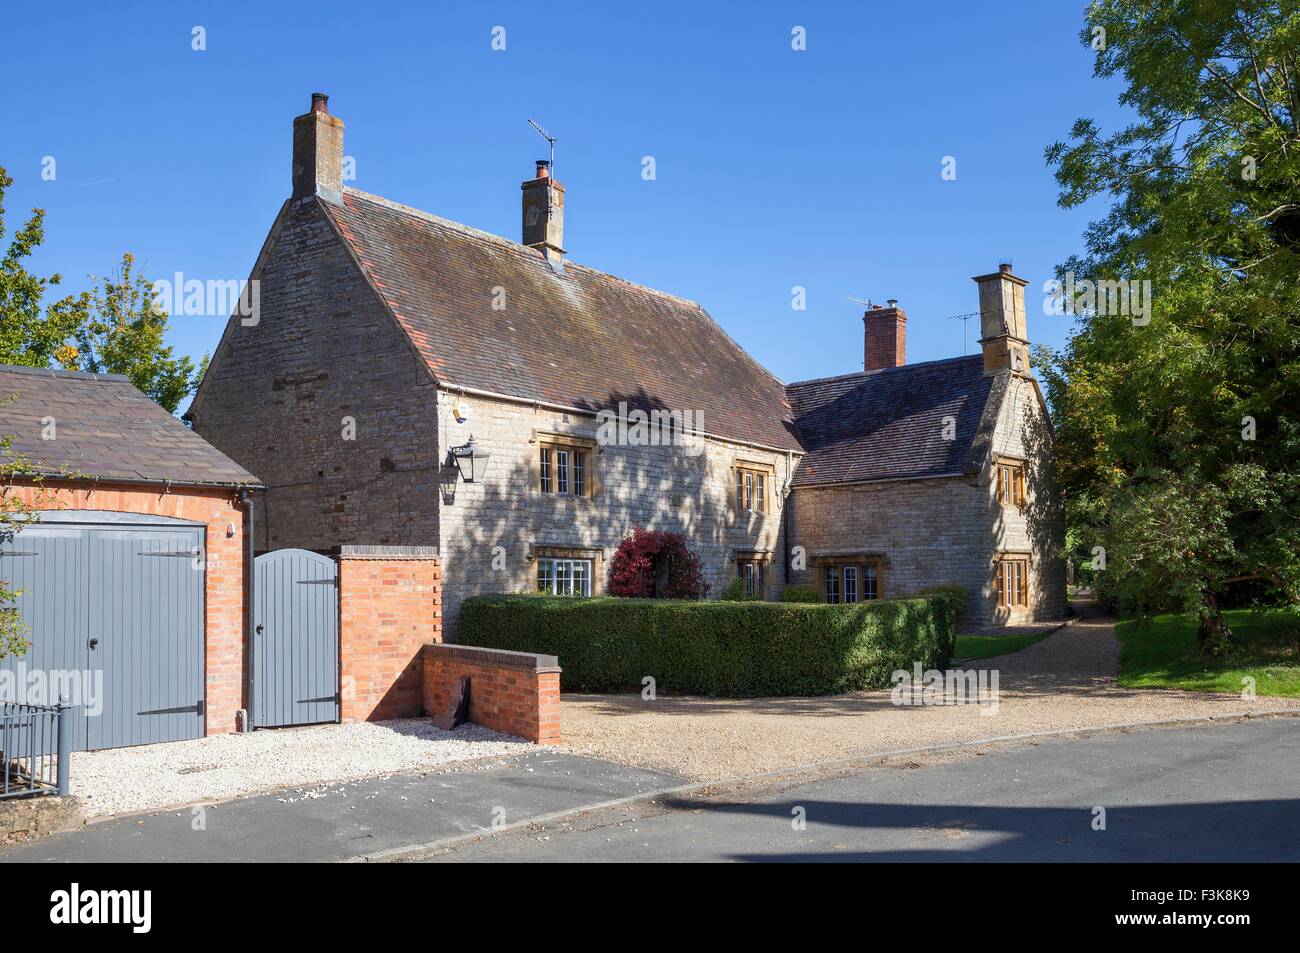 Halford village de Warwickshire, en Angleterre. Banque D'Images